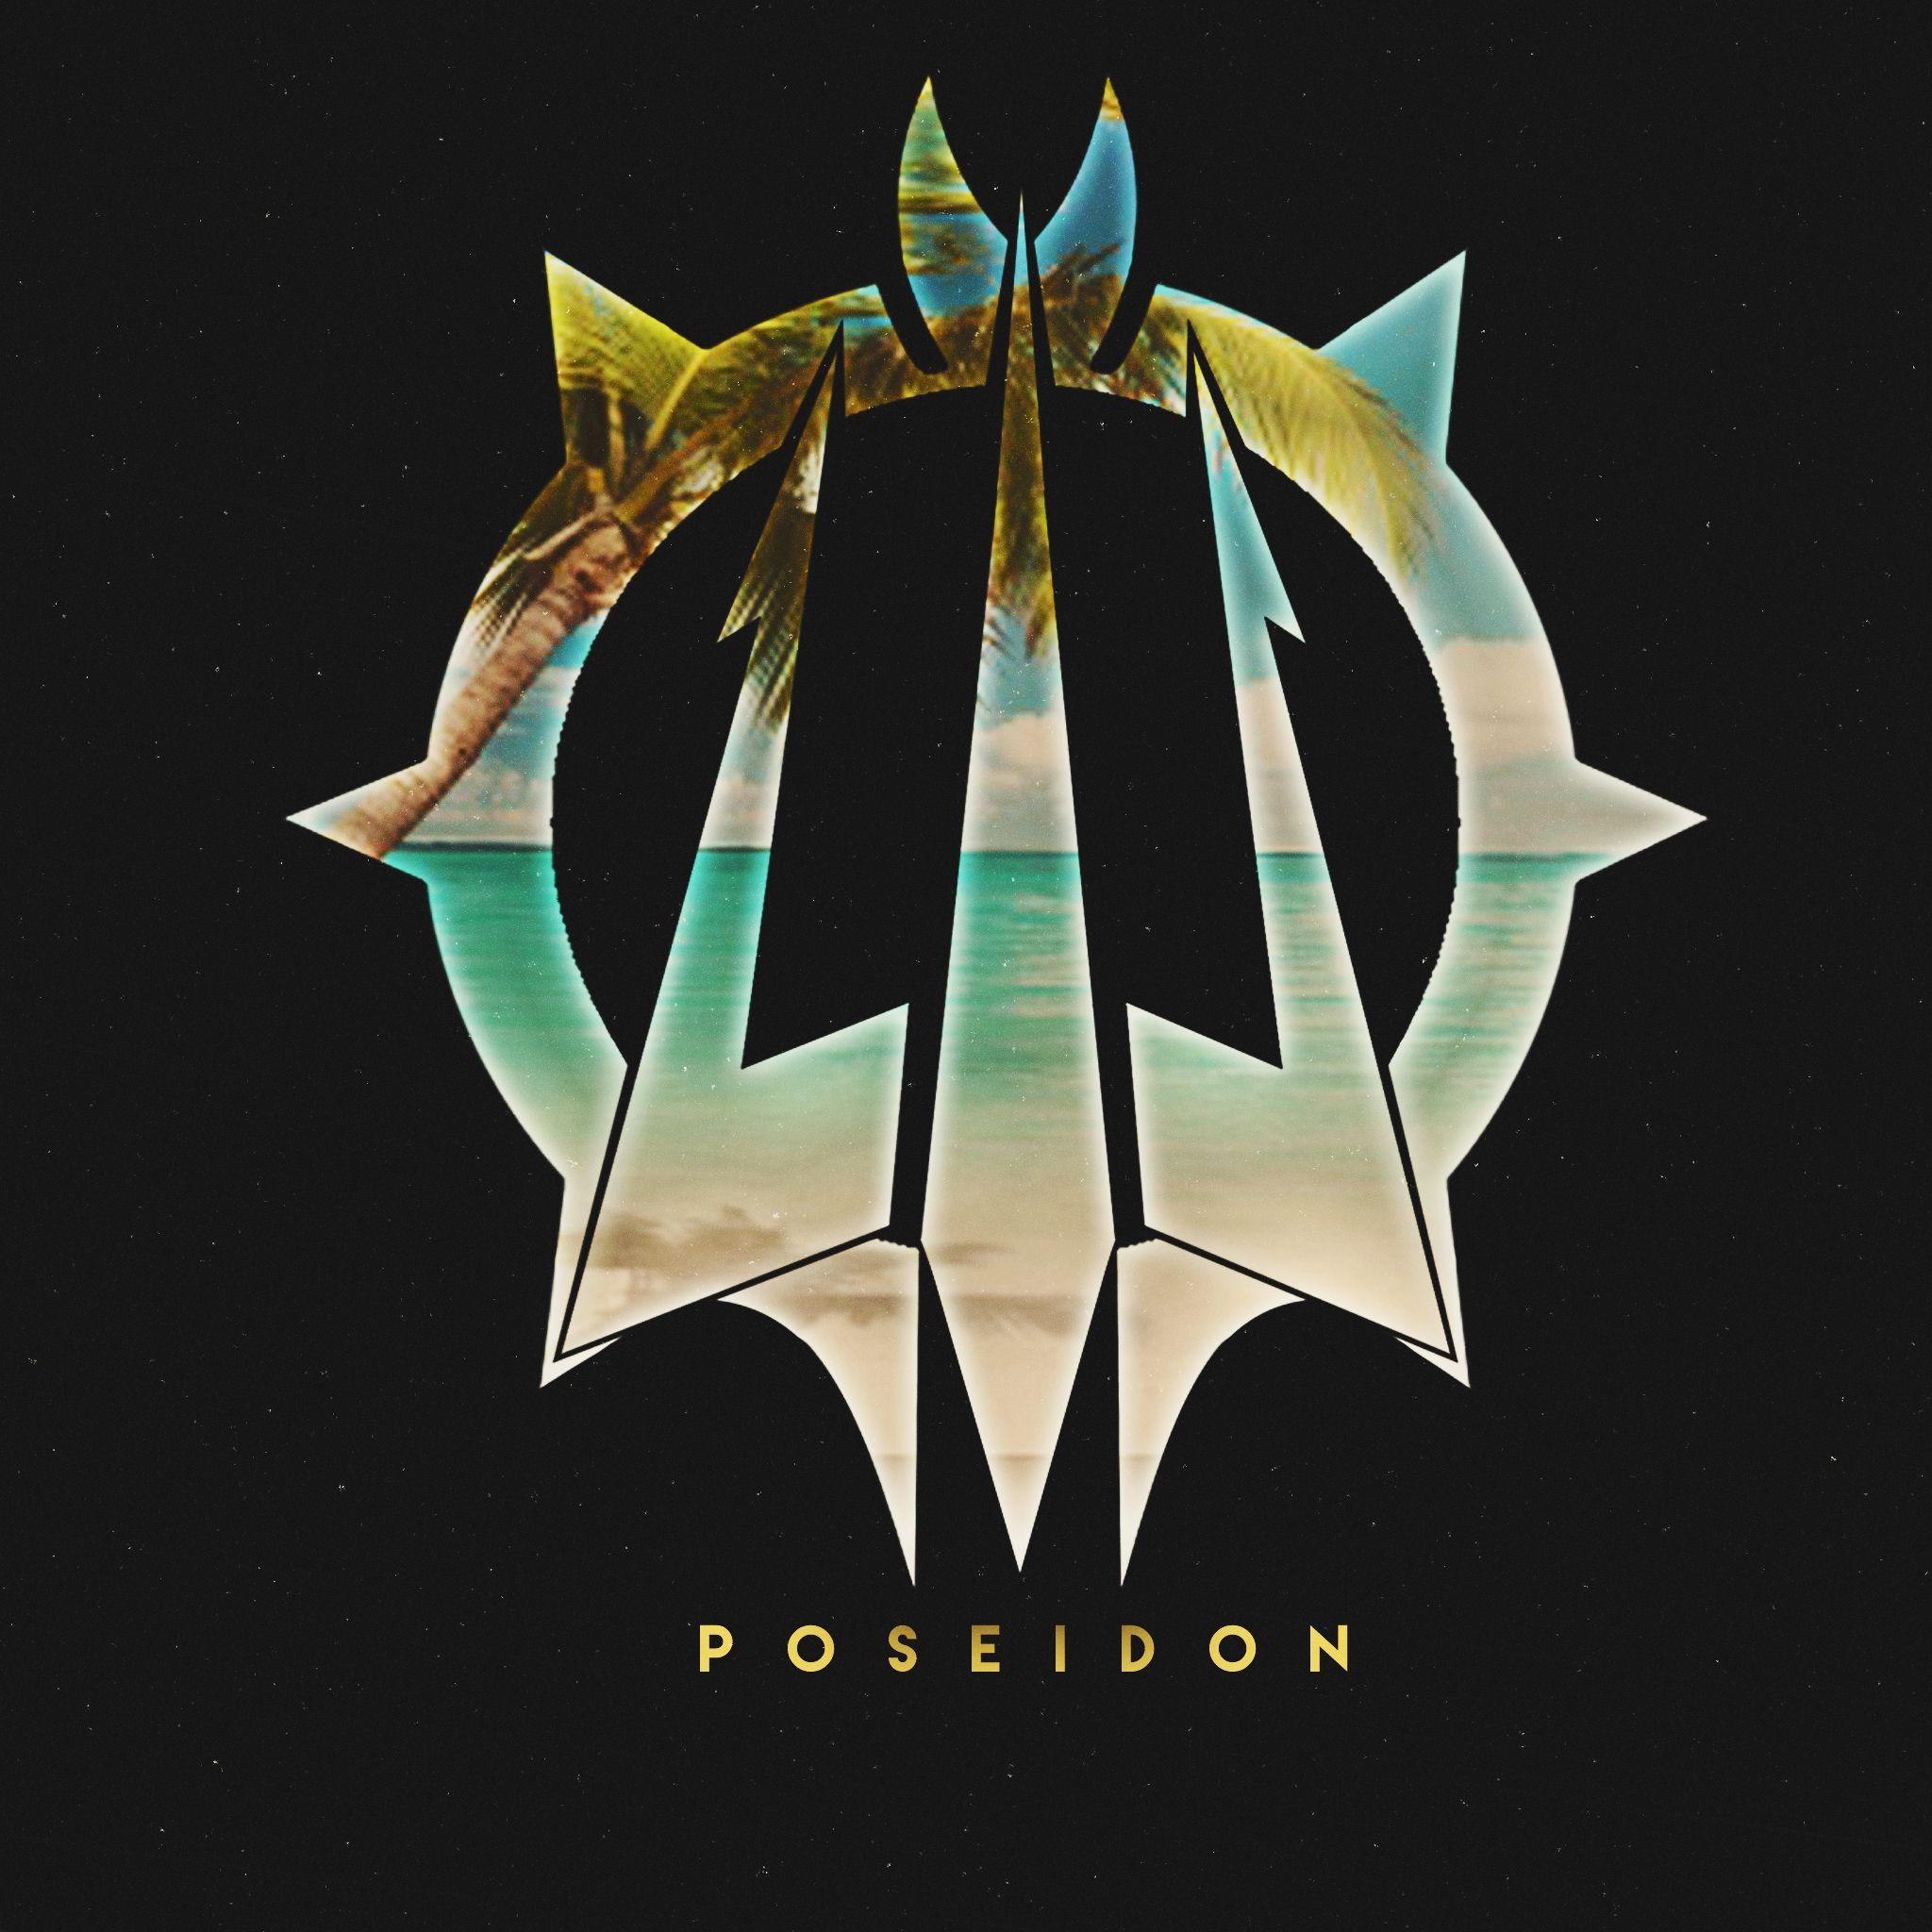 Poseidon Logo - POSEIDON LOGO - Album on Imgur